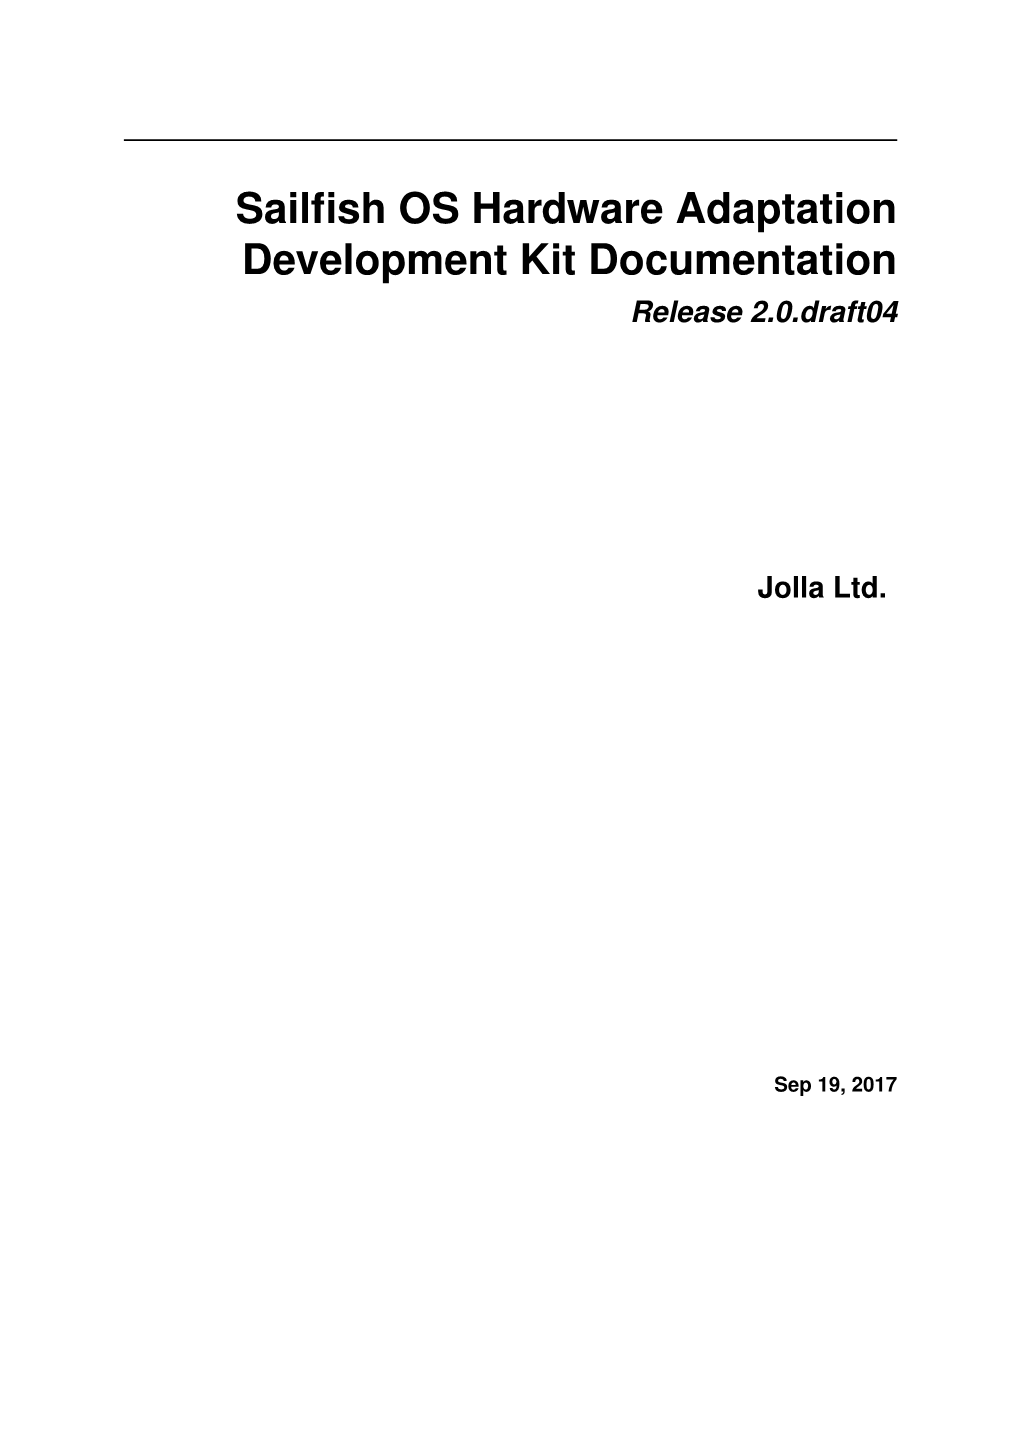 Sailfish OS Hardware Adaptation Development Kit Documentation